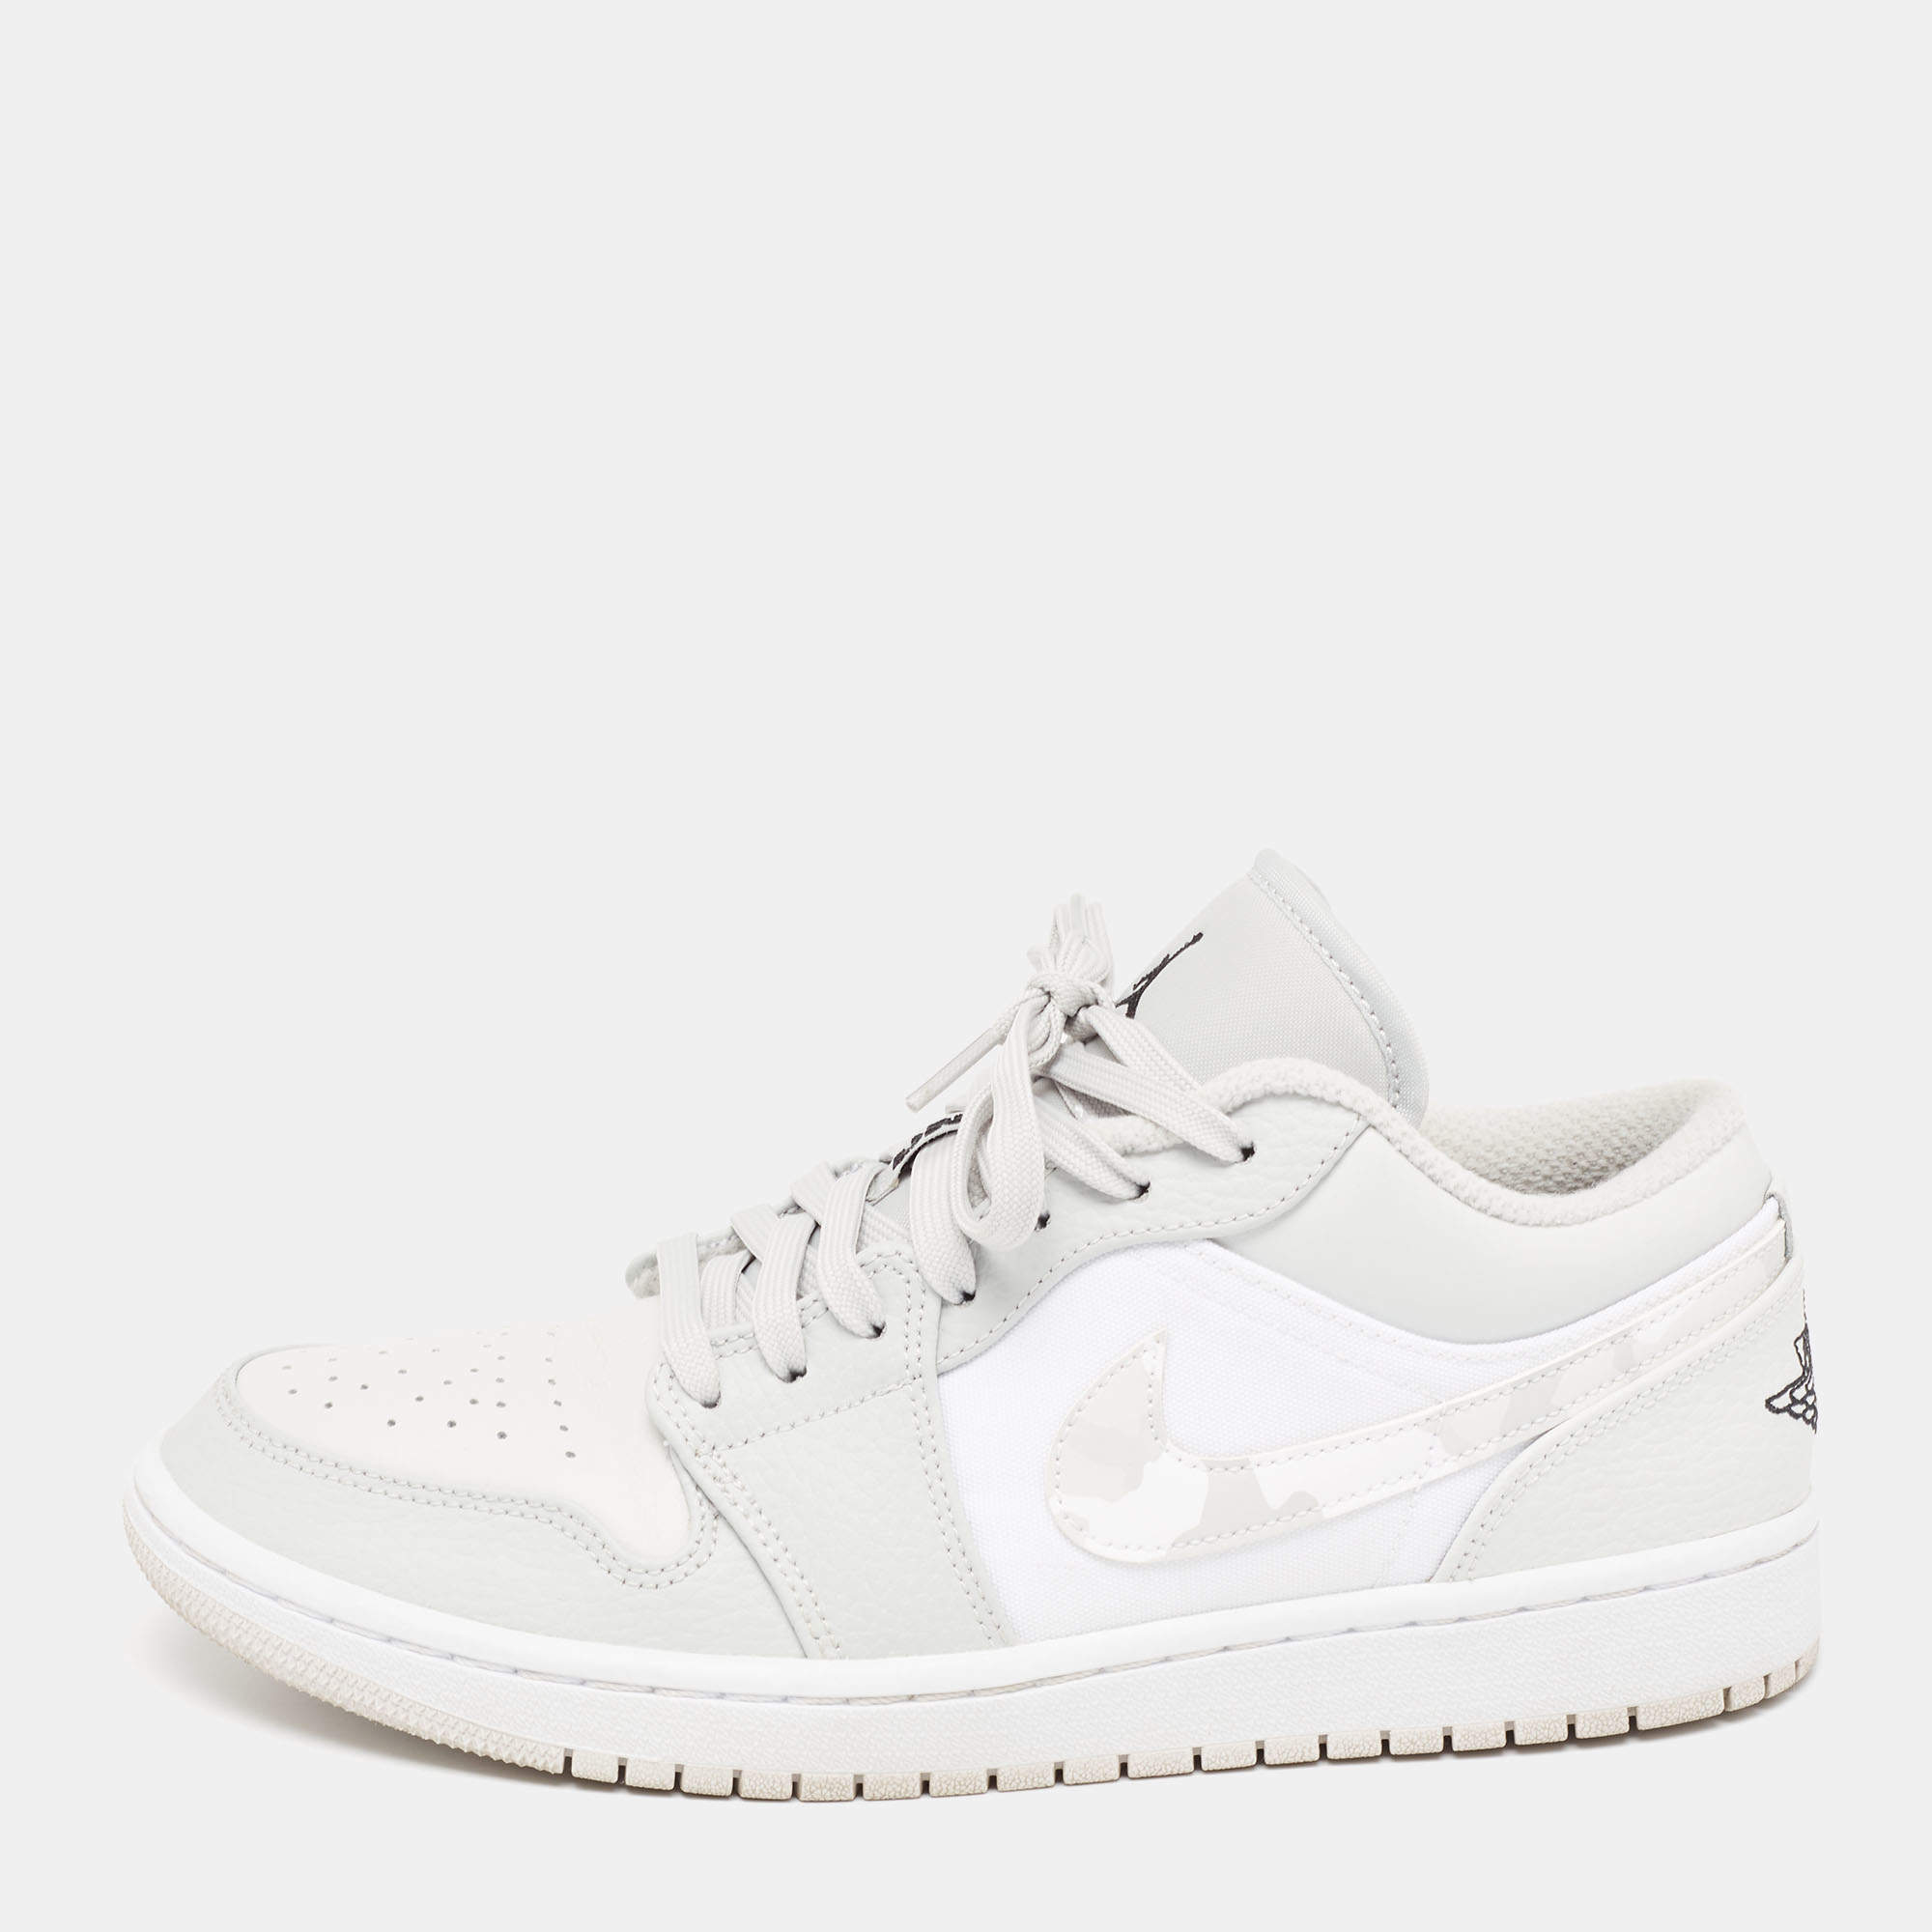 Jordan 1 Low Light Smoke Grey/White Leather  Sneakers Size 42